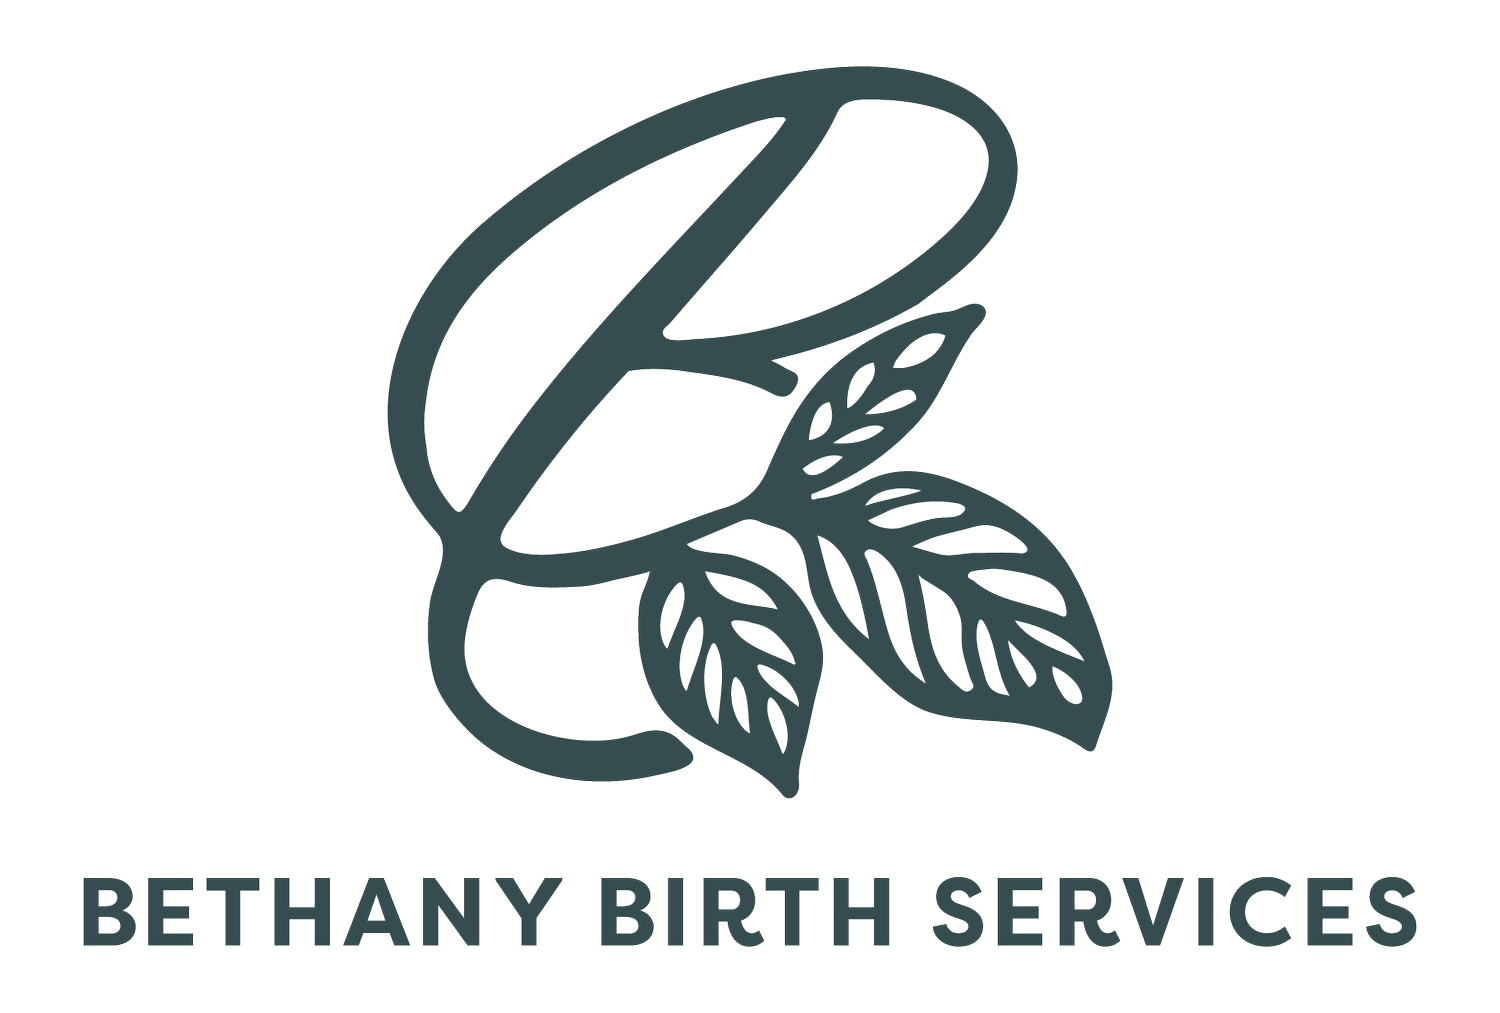 Bethany Birth Services - Intuitive birth | Postpartum wellness